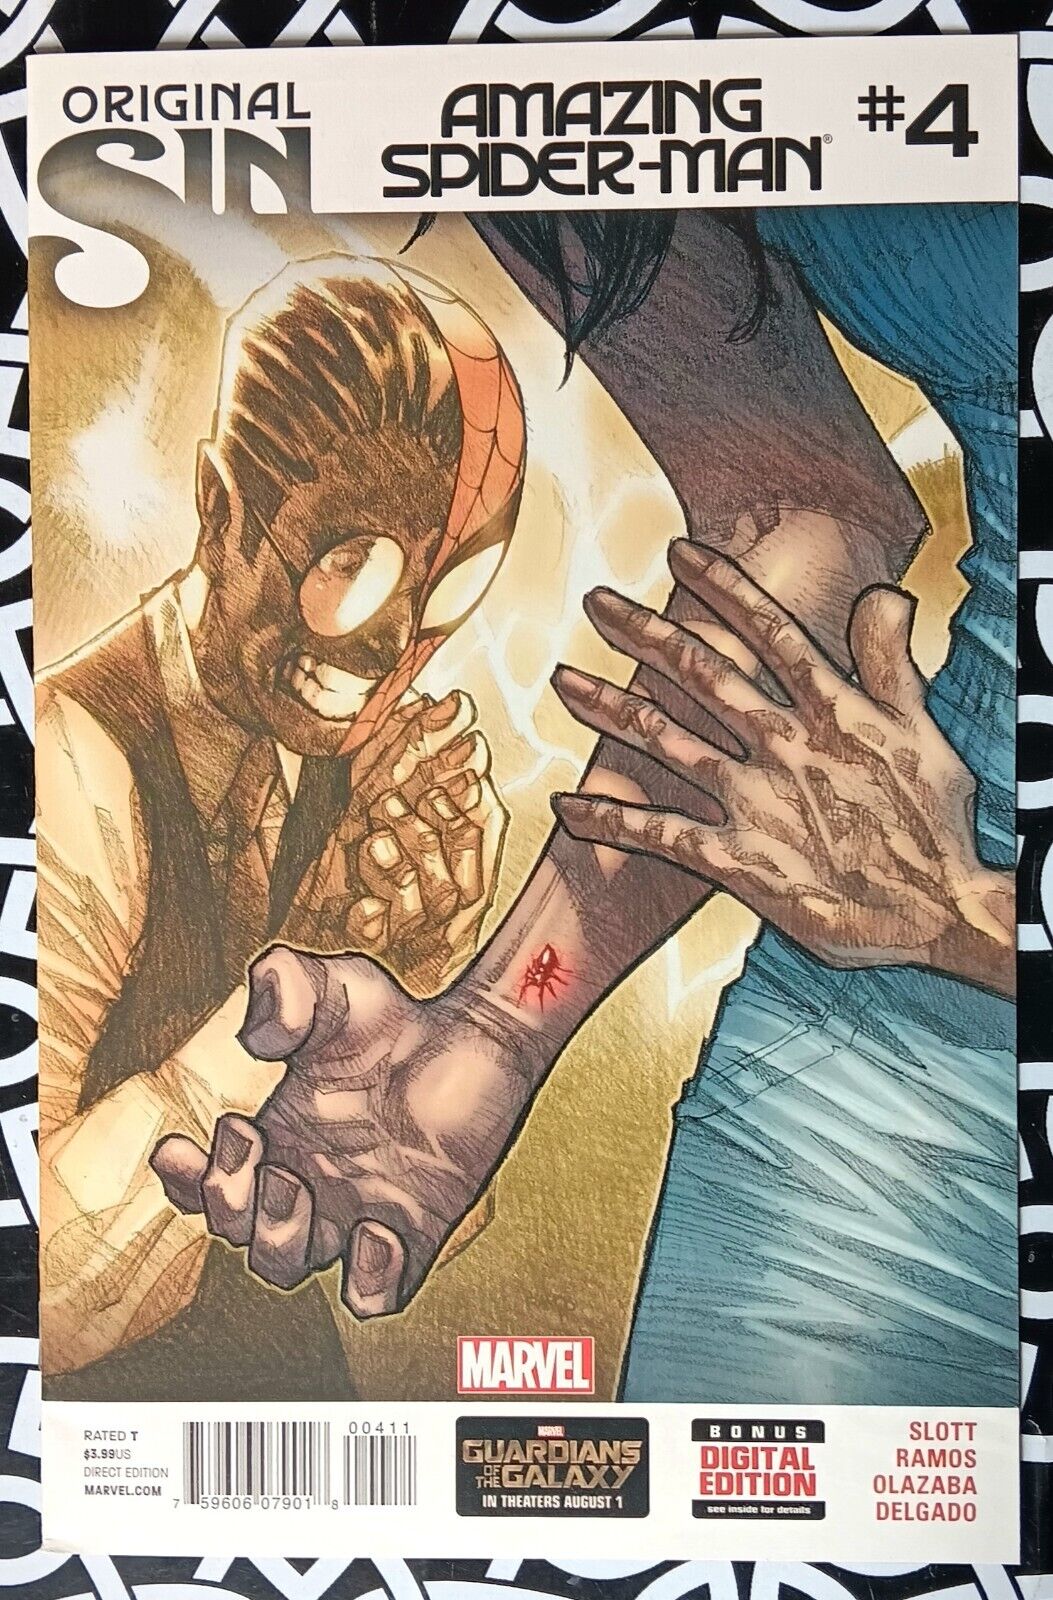 Amazing Spider-Man #4 - NM - 2014 - Marvel - Original Sin - 1st app. of Silk 🔥 